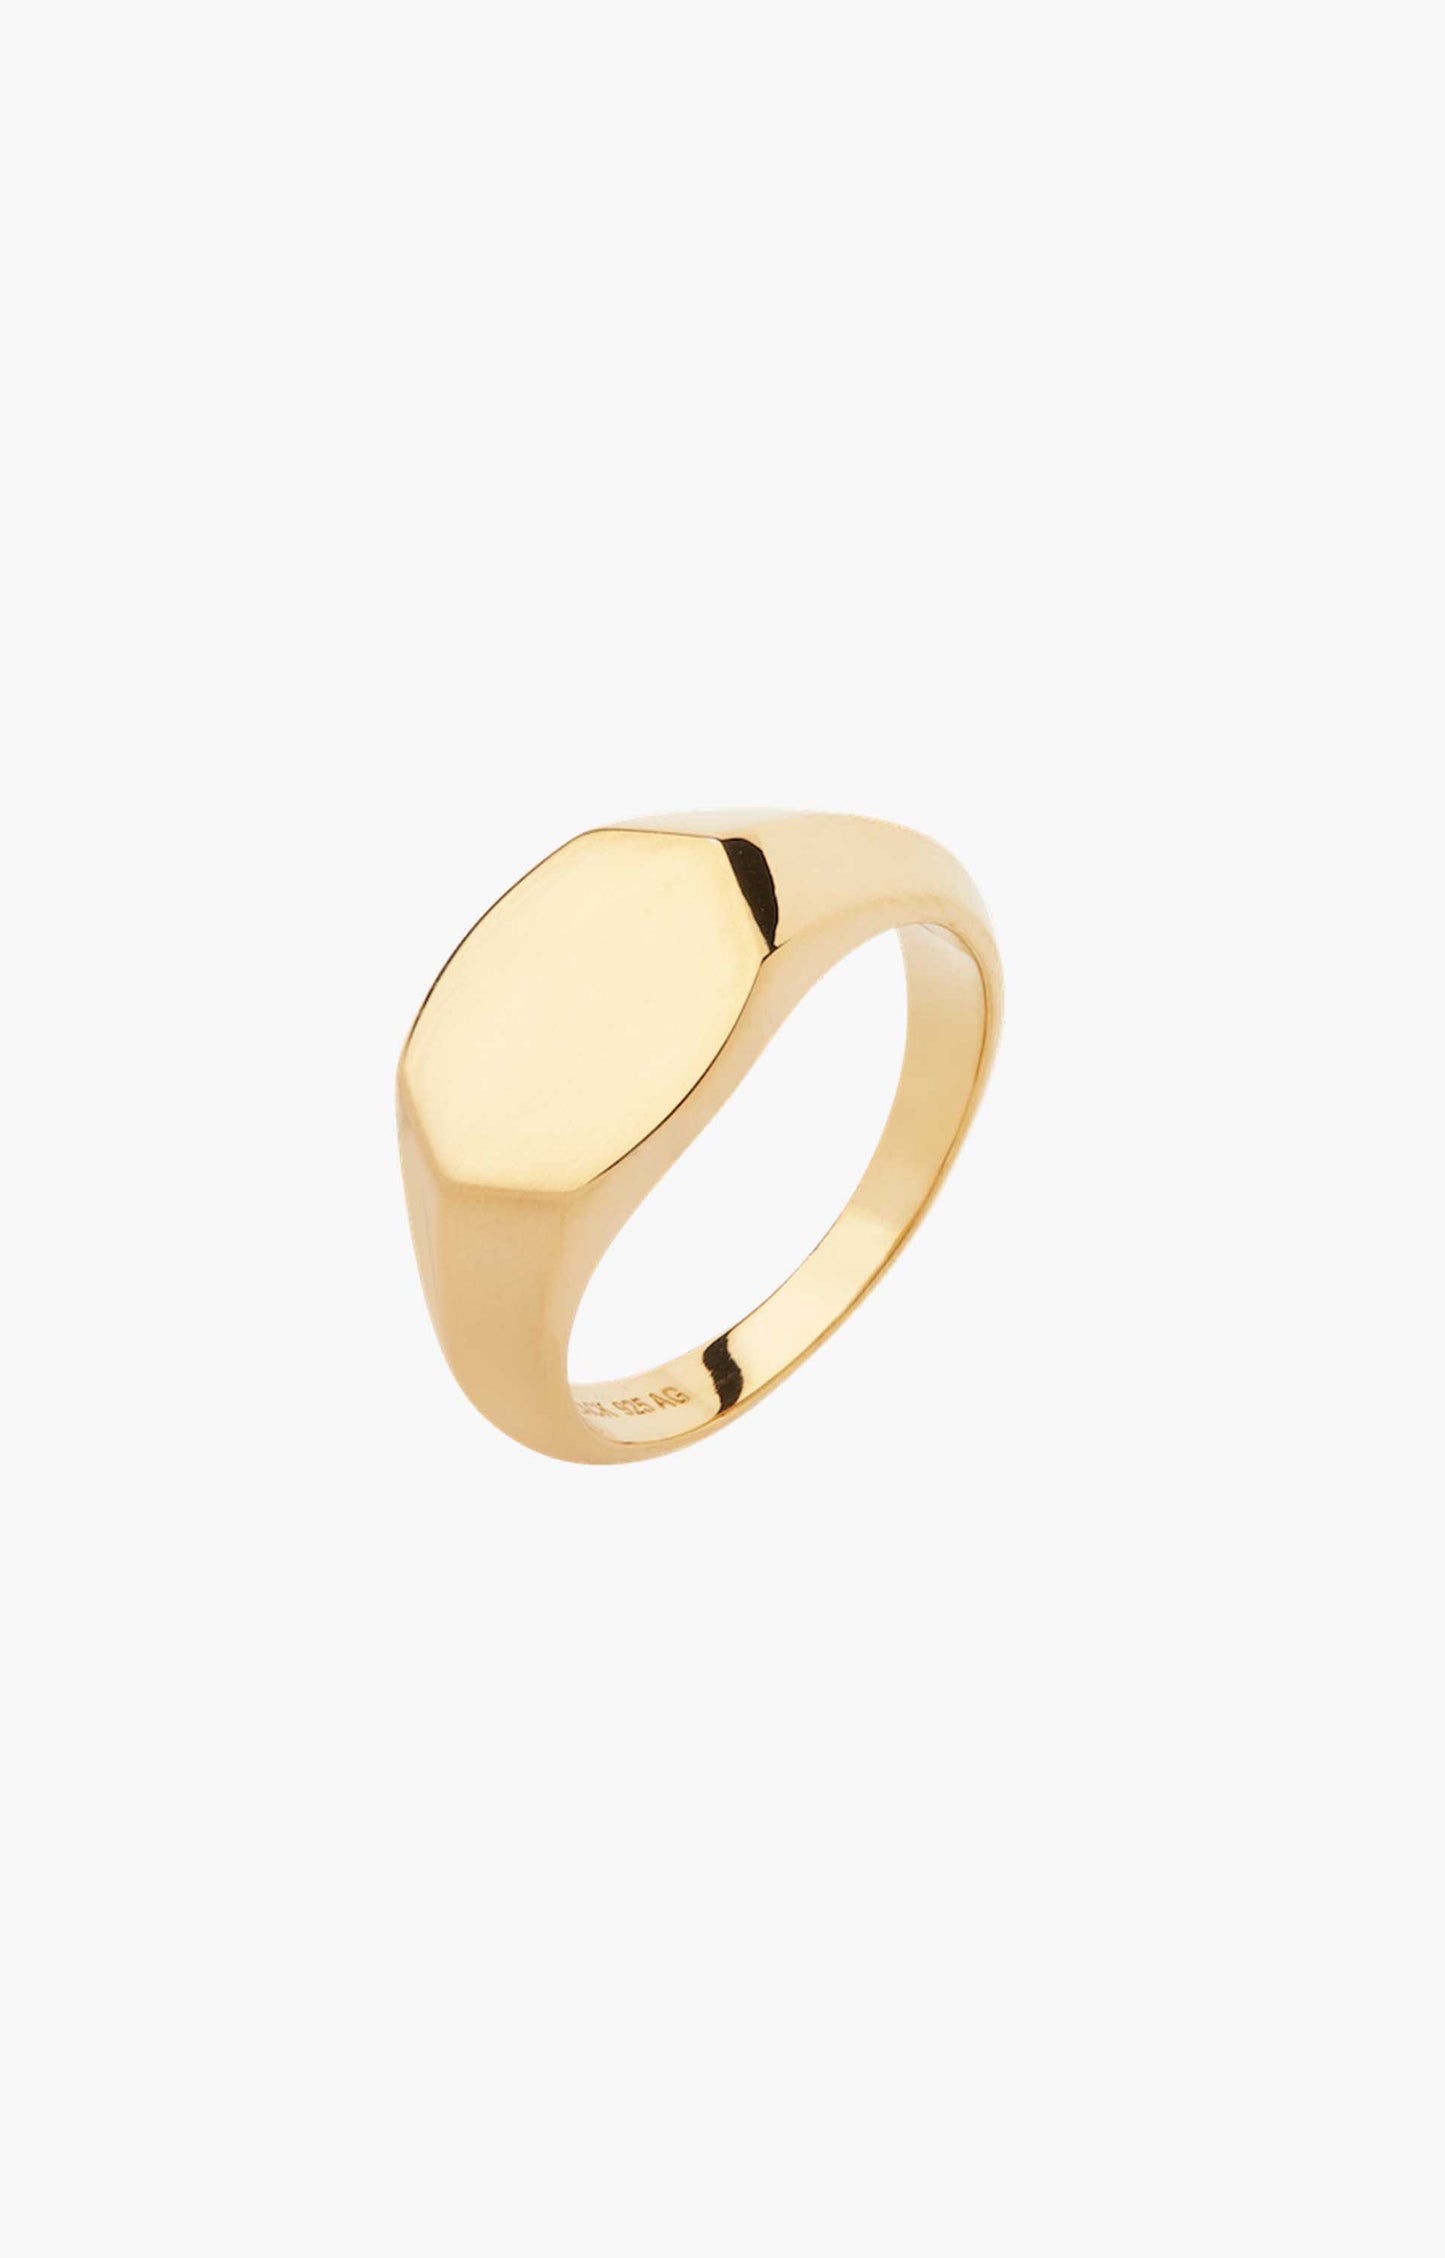 Gordon Signet Ring, Yellow Gold